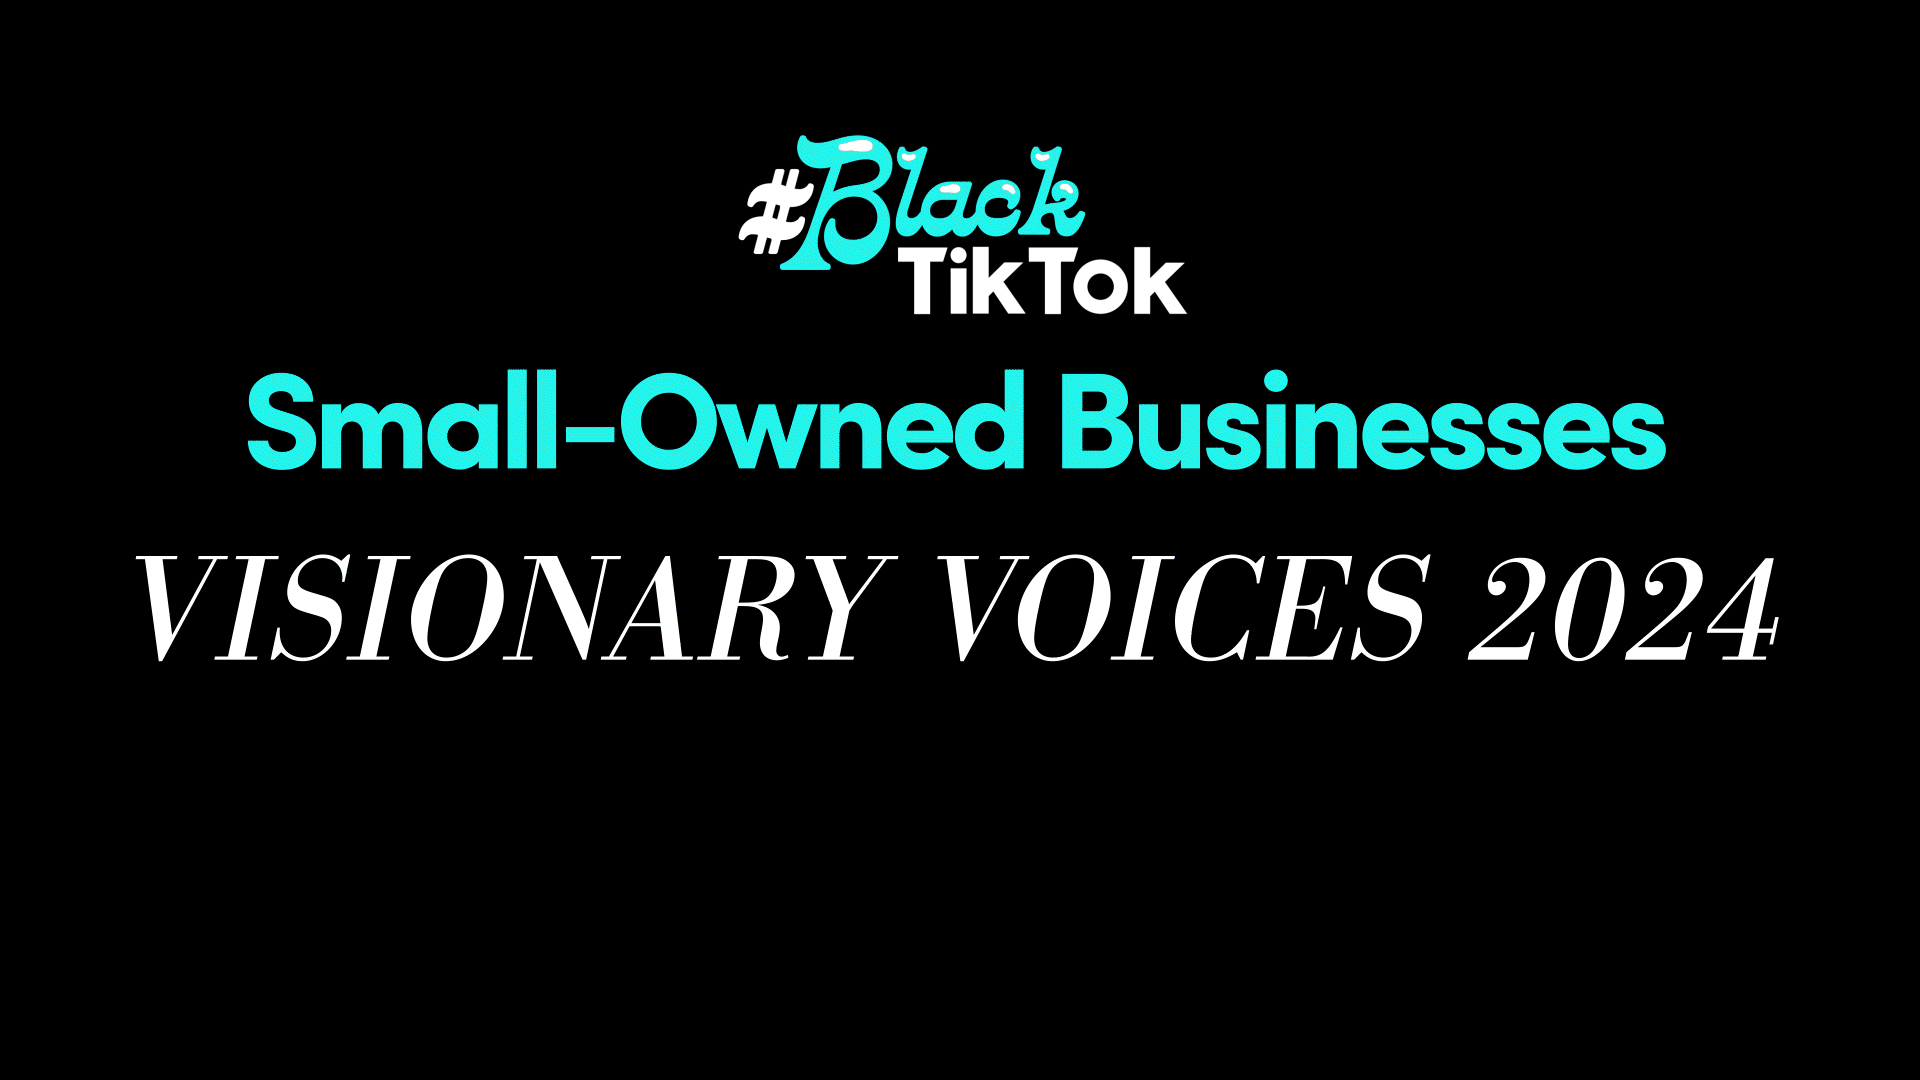 Tiktok visionary voices